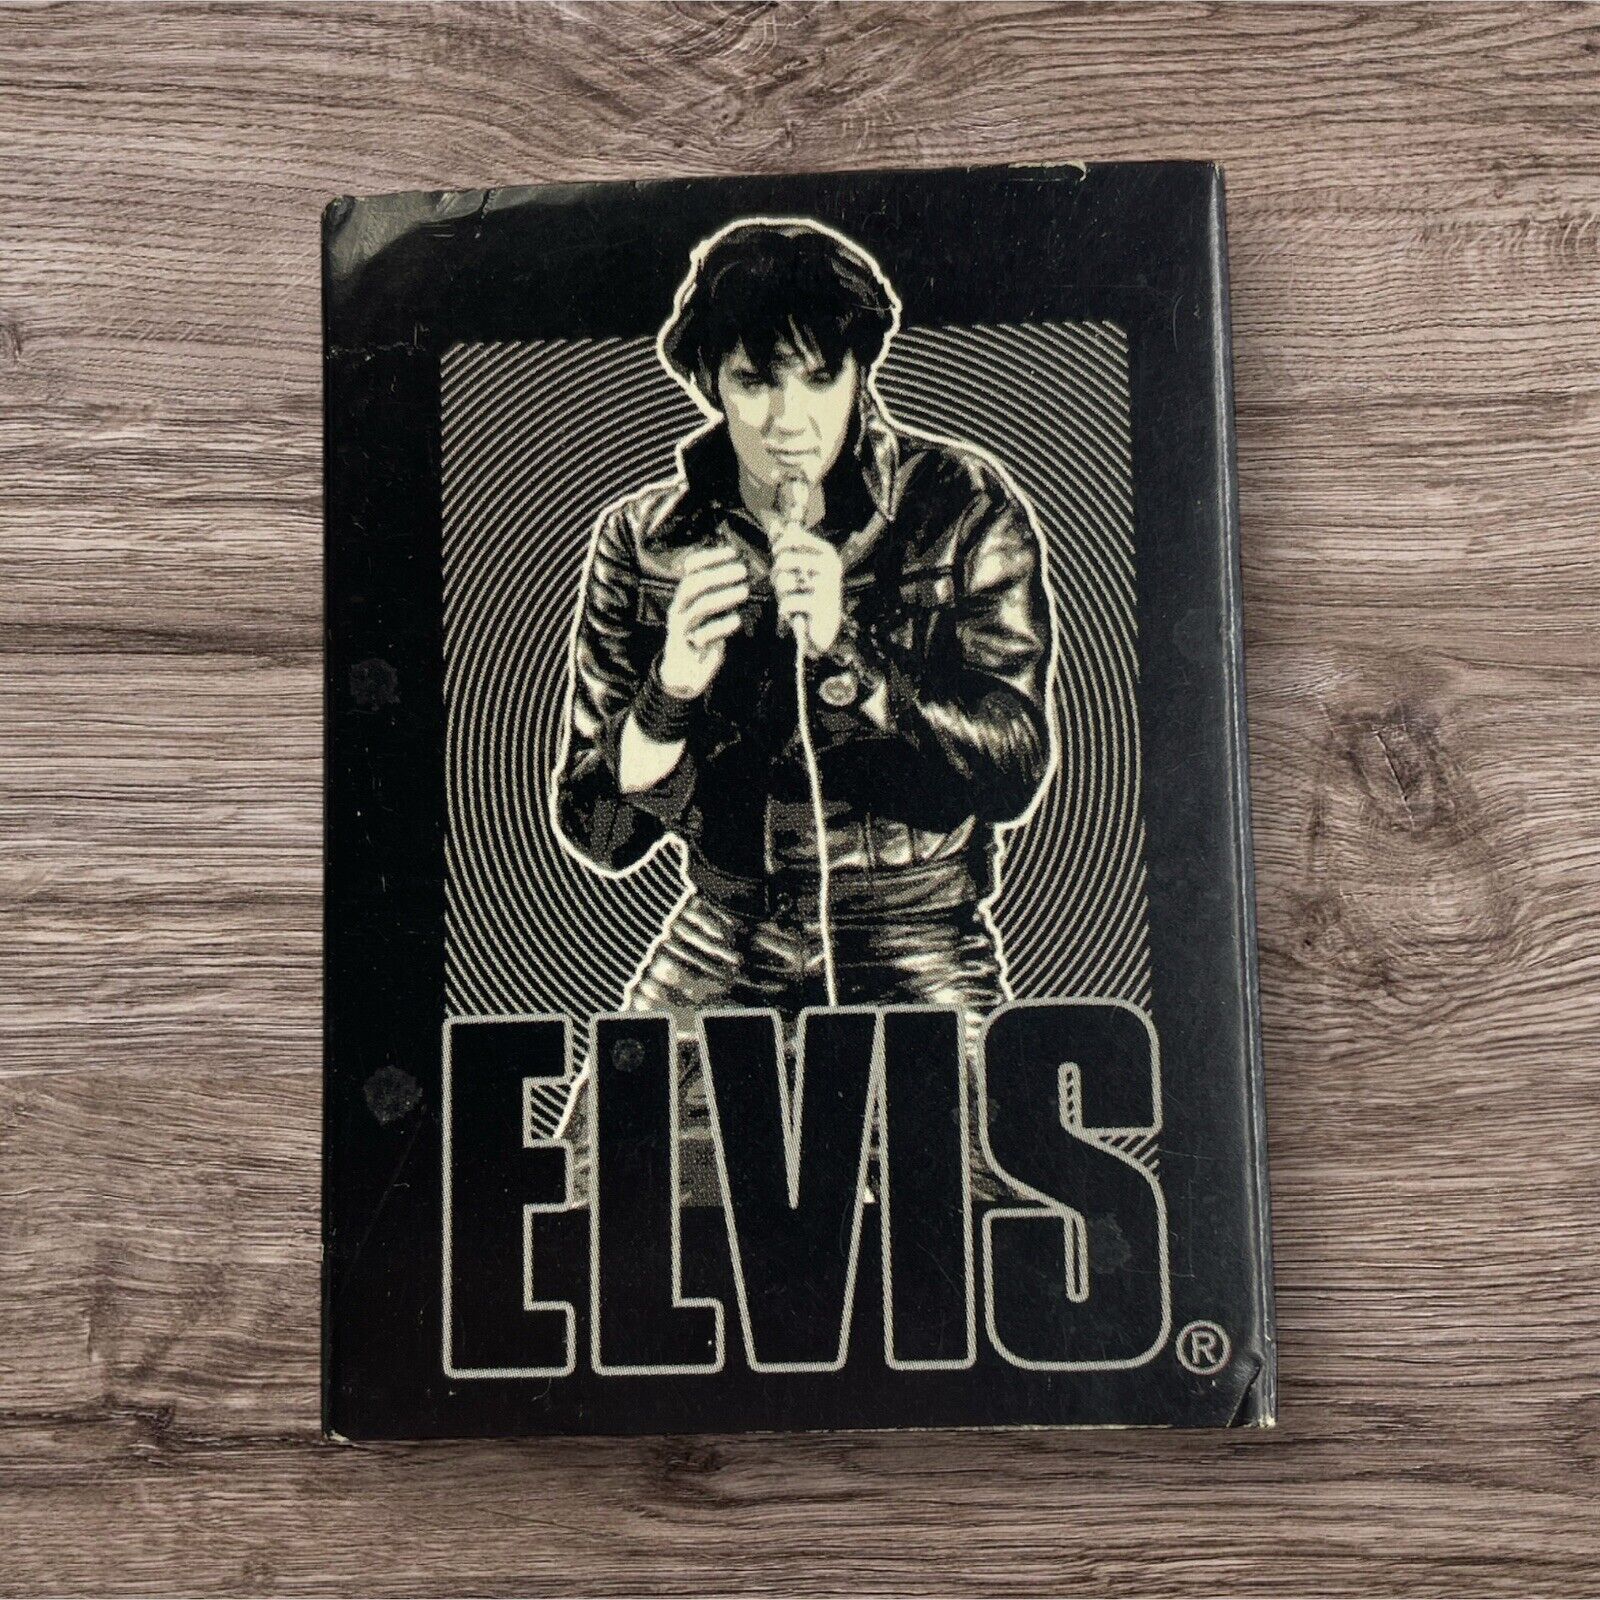 Elvis Presley Zippo Brushed Chrome Lighter NEW in Original Box Made in the USA